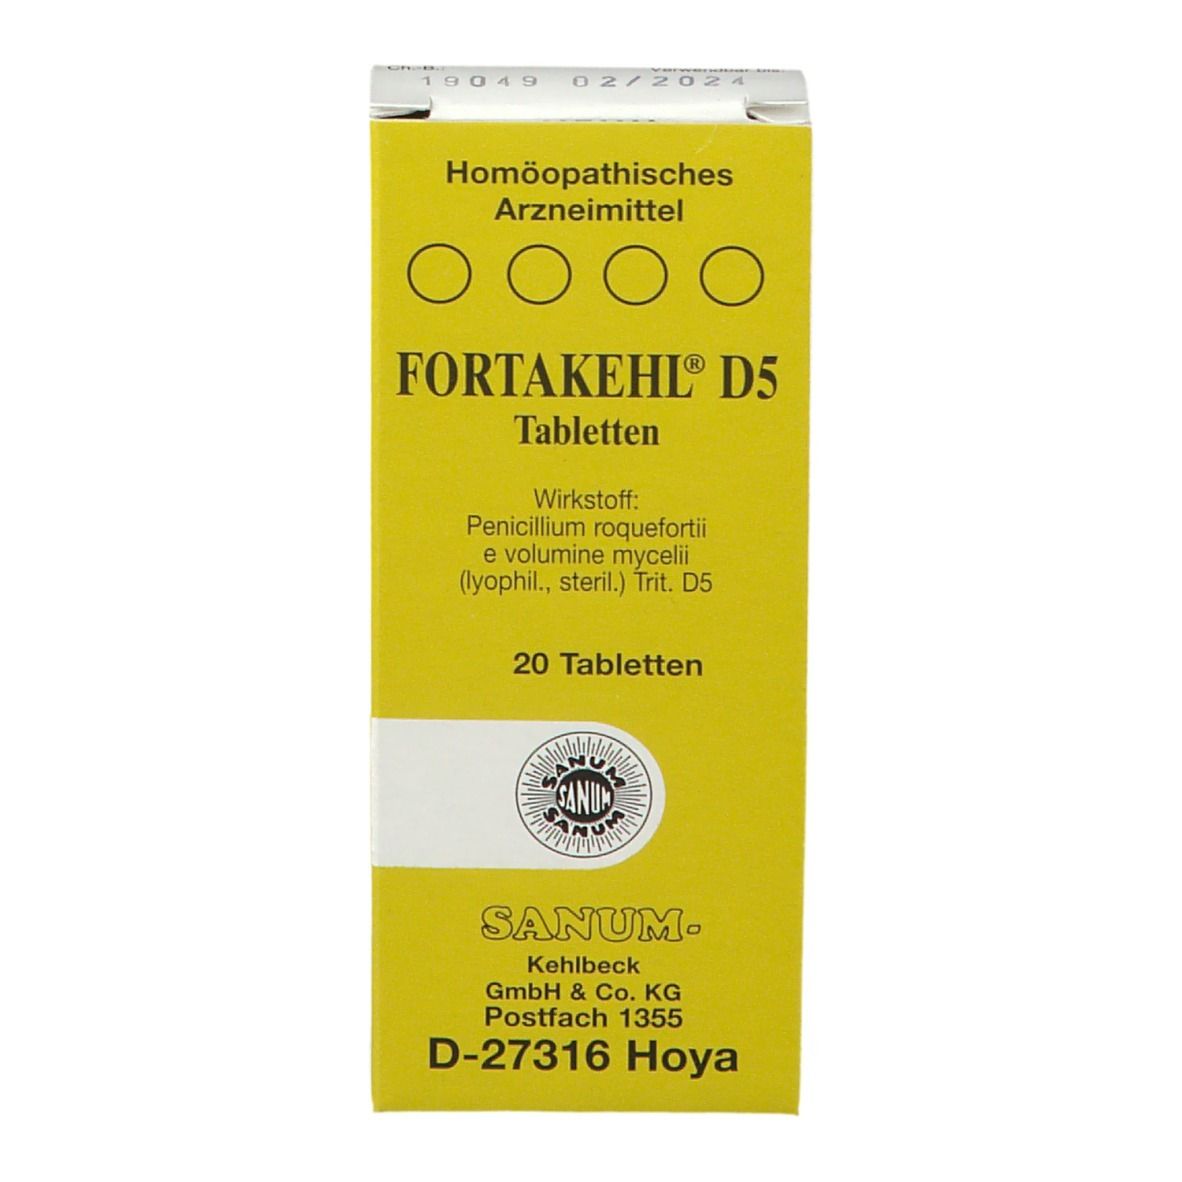 Fortakehl® D5 Tabletten